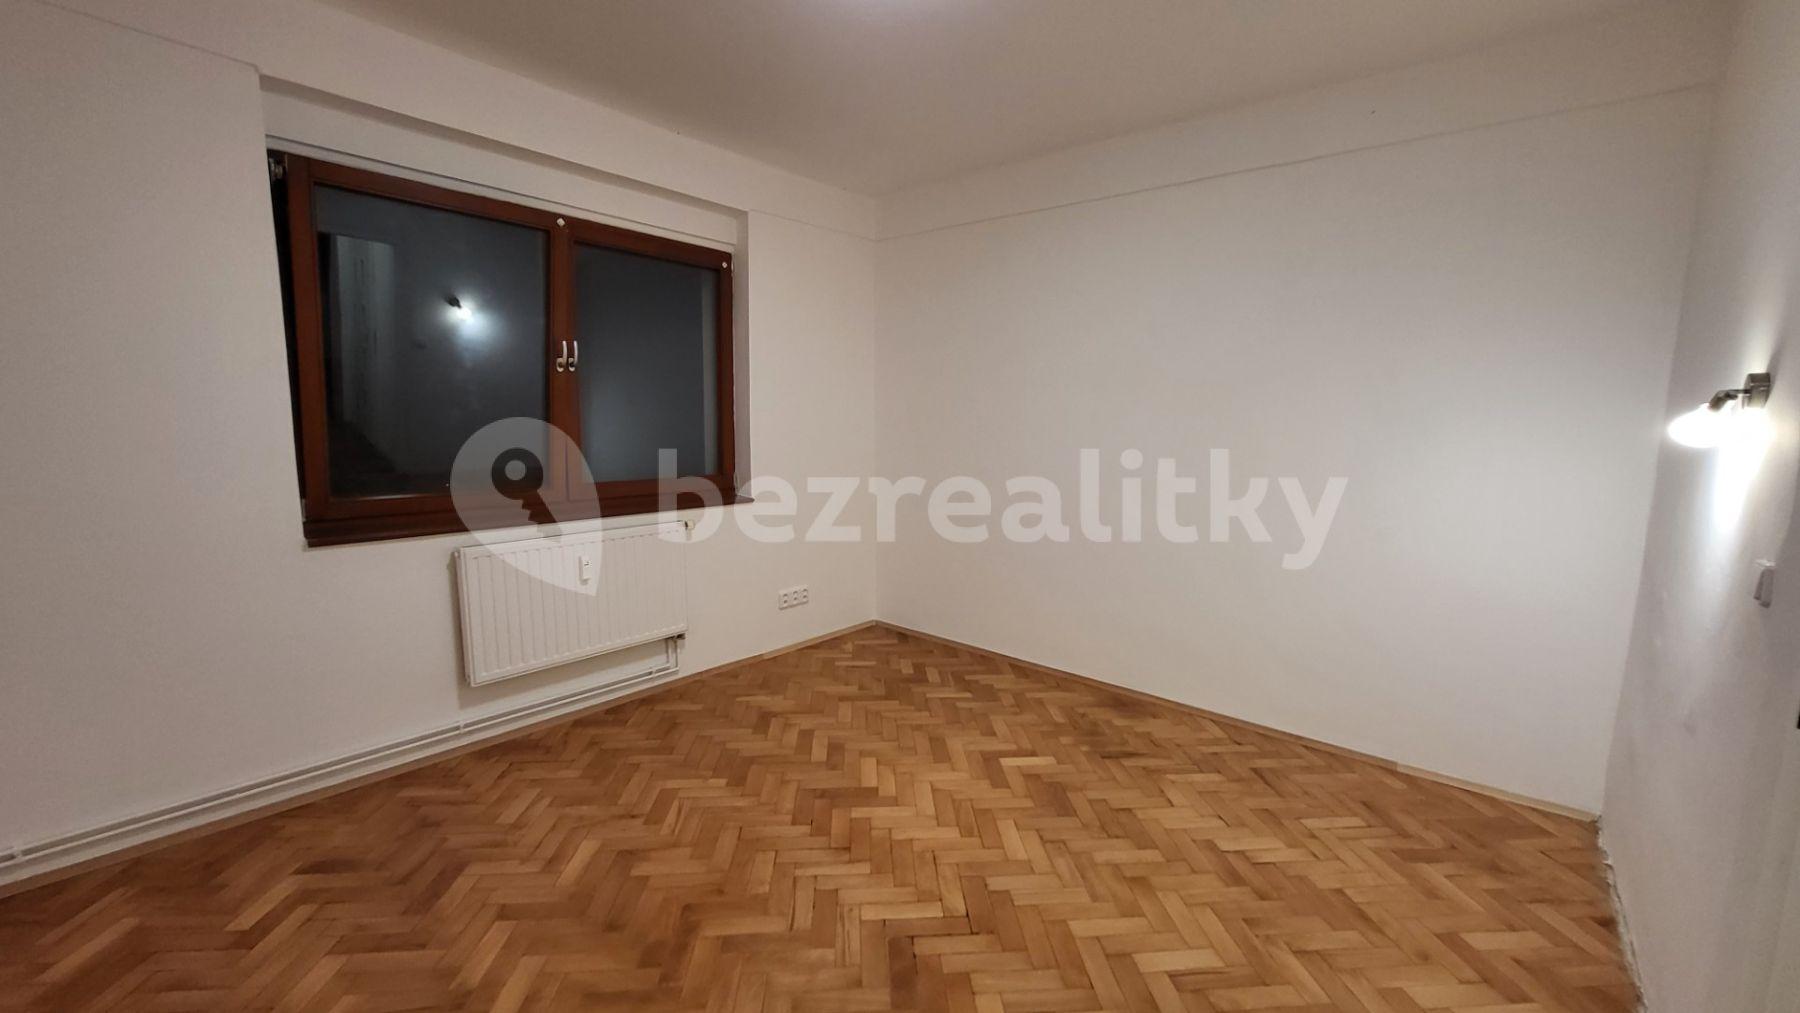 2 bedroom with open-plan kitchen flat to rent, 67 m², Koldům, Litvínov, Ústecký Region